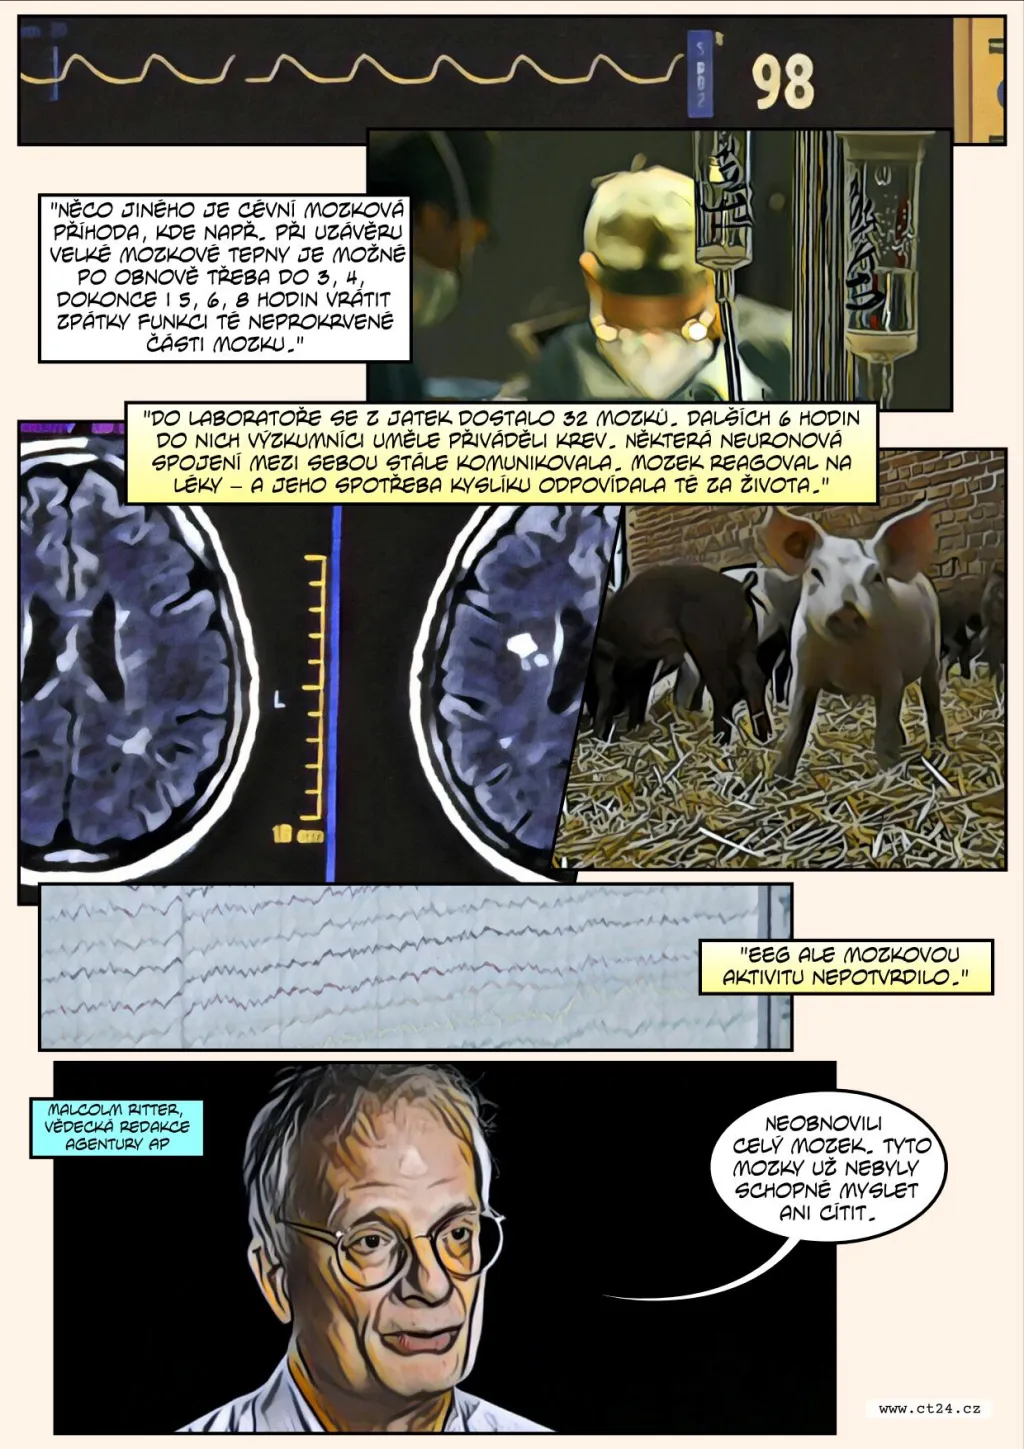 Komiks: Vědci oživili mozky